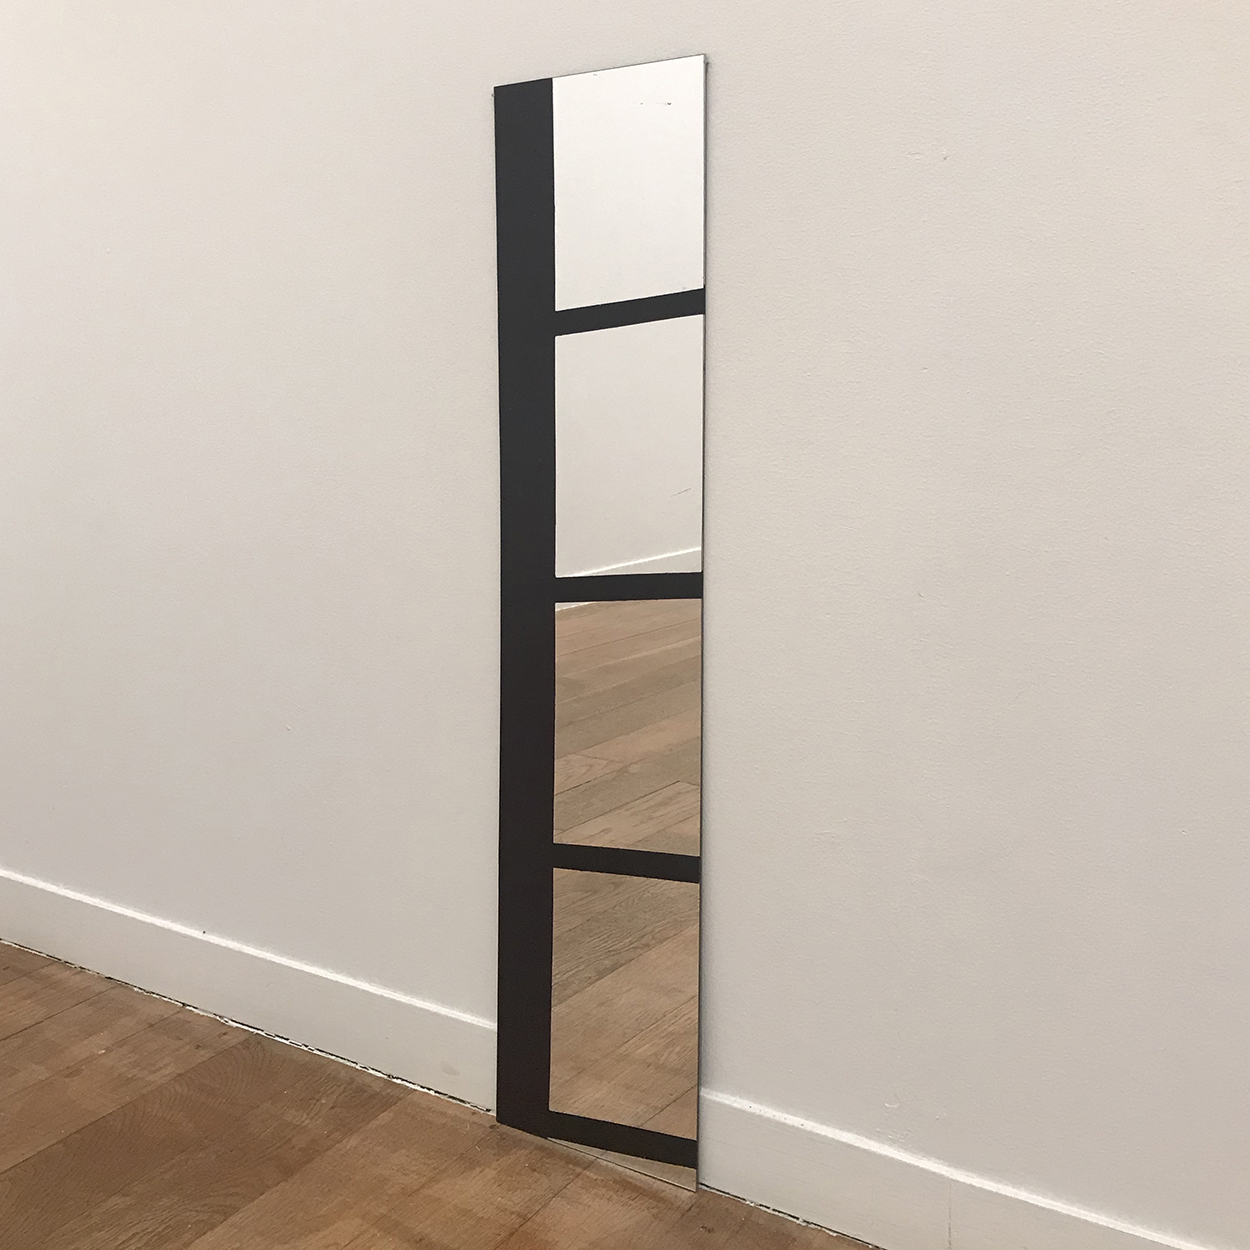 　　　Untitled, Acrylic on acrylic mirror, 760 x 150 x 2 mm, 2018